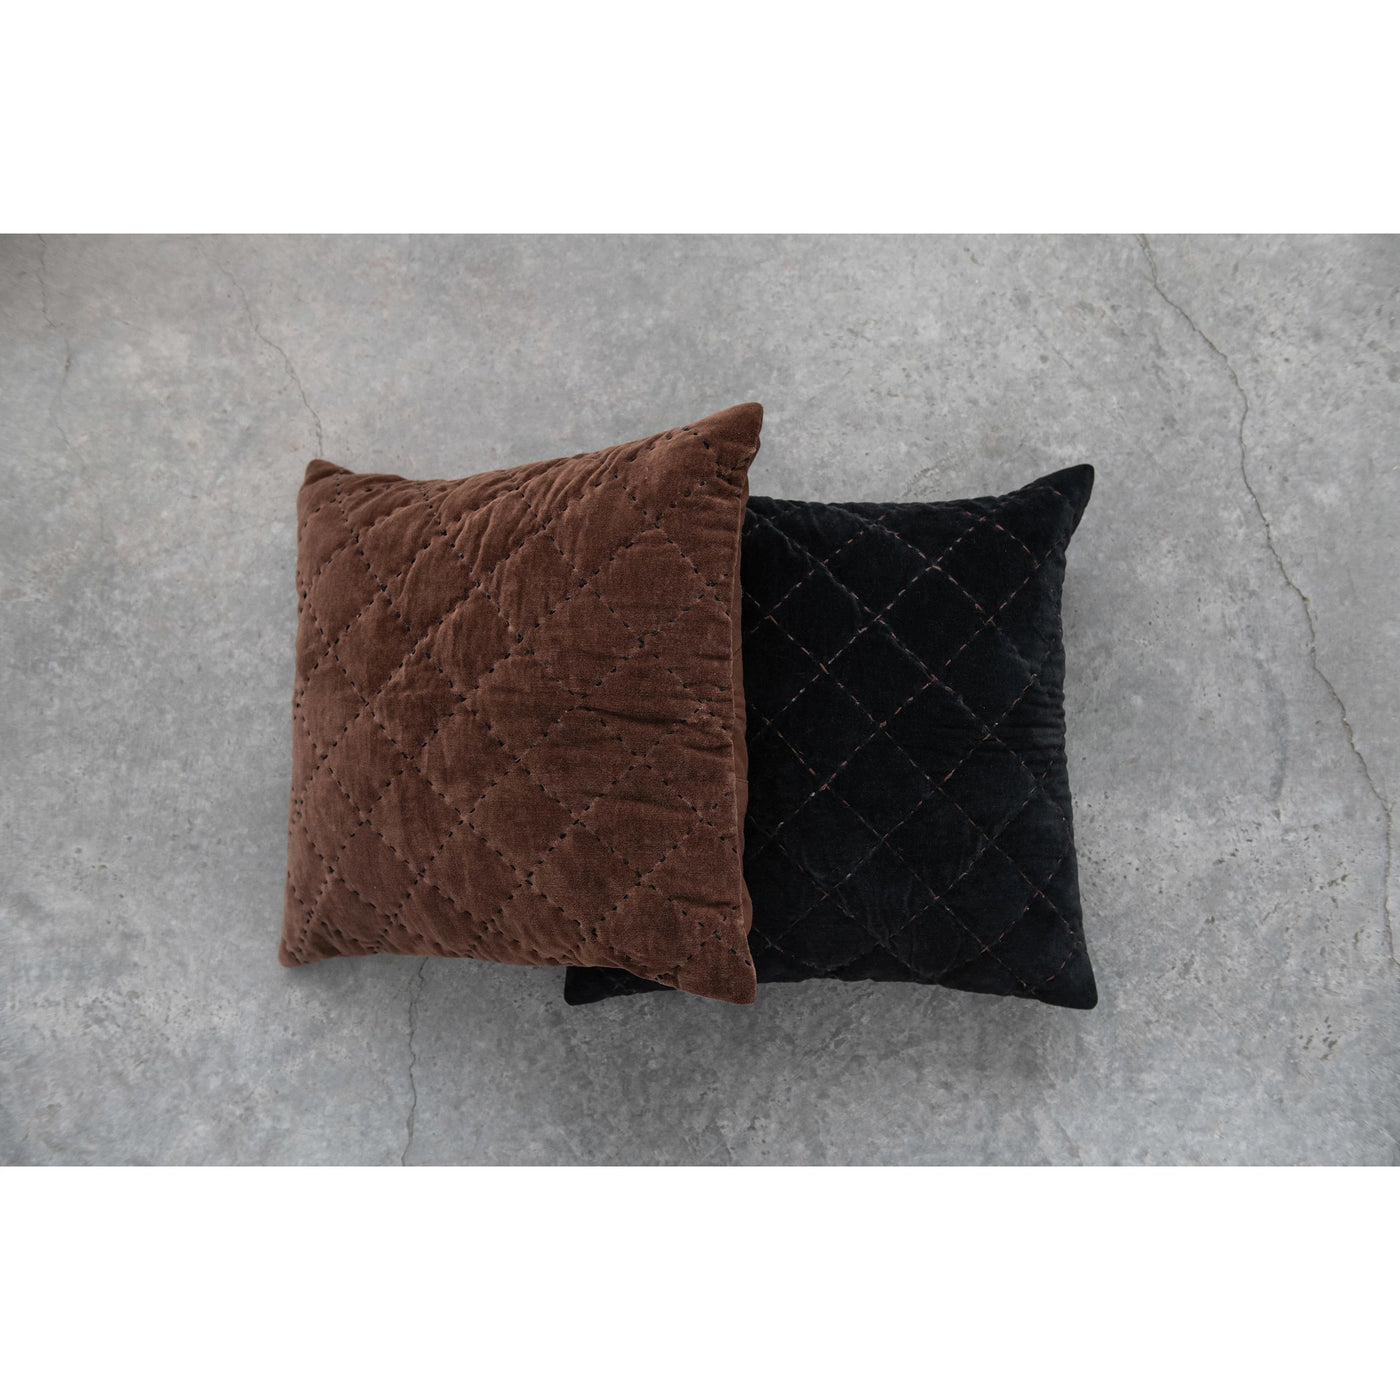 20" Cotton Velvet Pillow with Kantha Stitch, 2 Colors